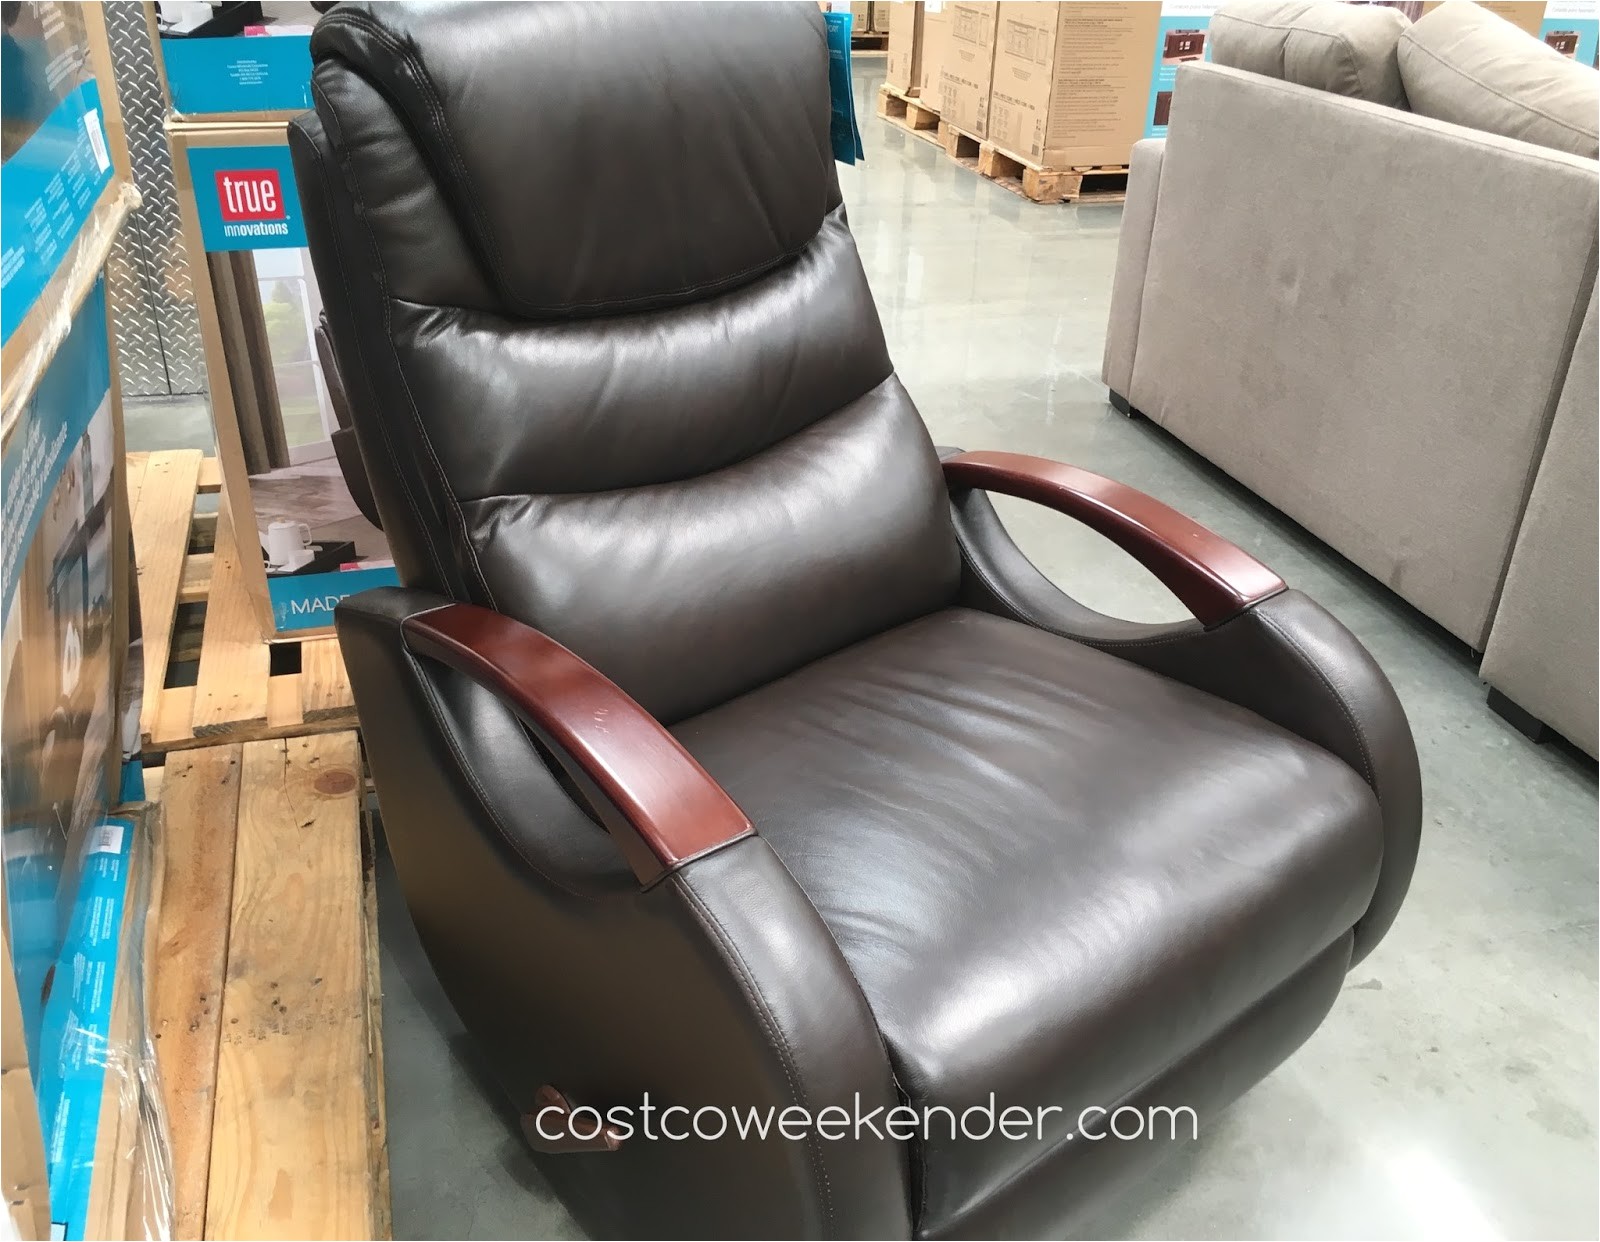 true innovations leather swivel glider recliner costco 1024885 costco product info